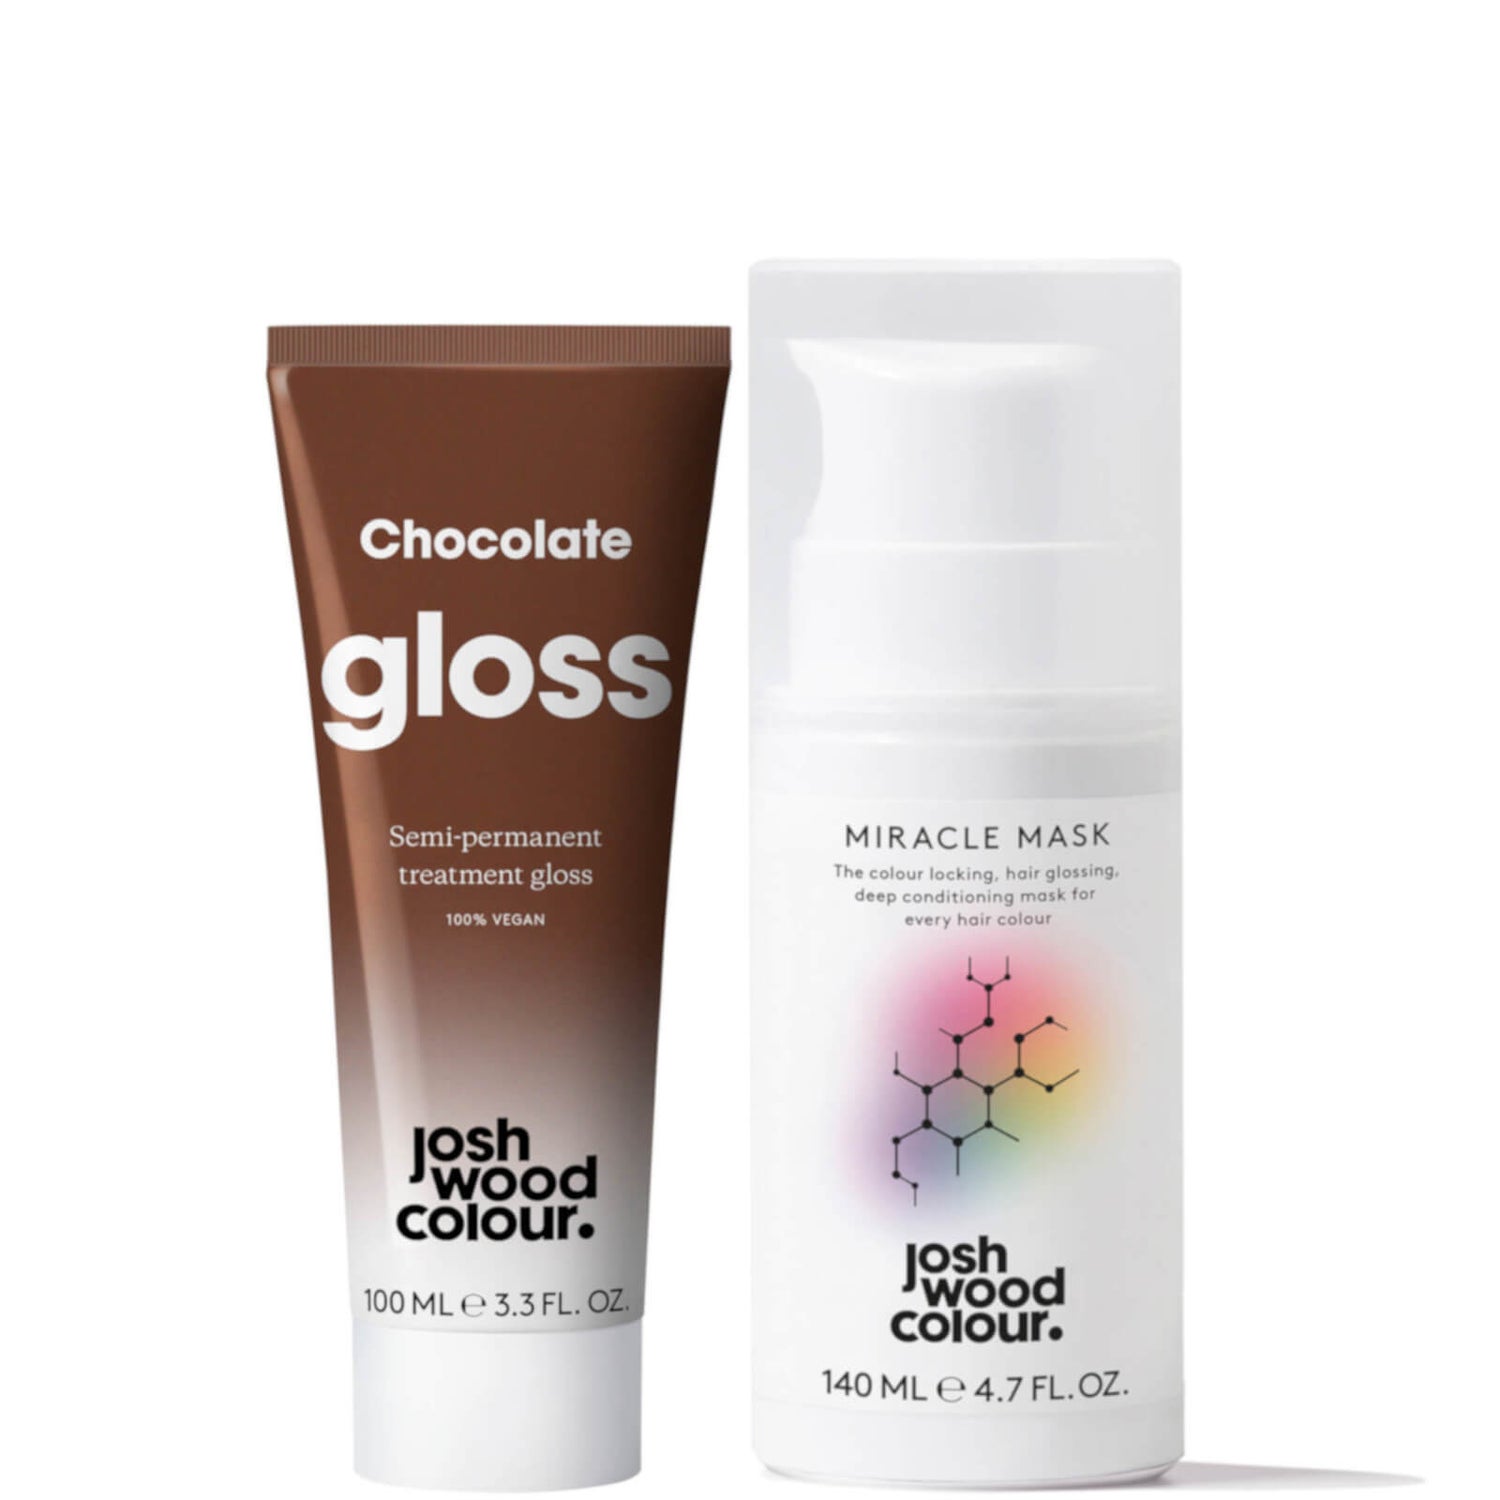 Josh Wood Colour Chocolate Gloss and Miracle Mask Bundle (Worth £38.00)